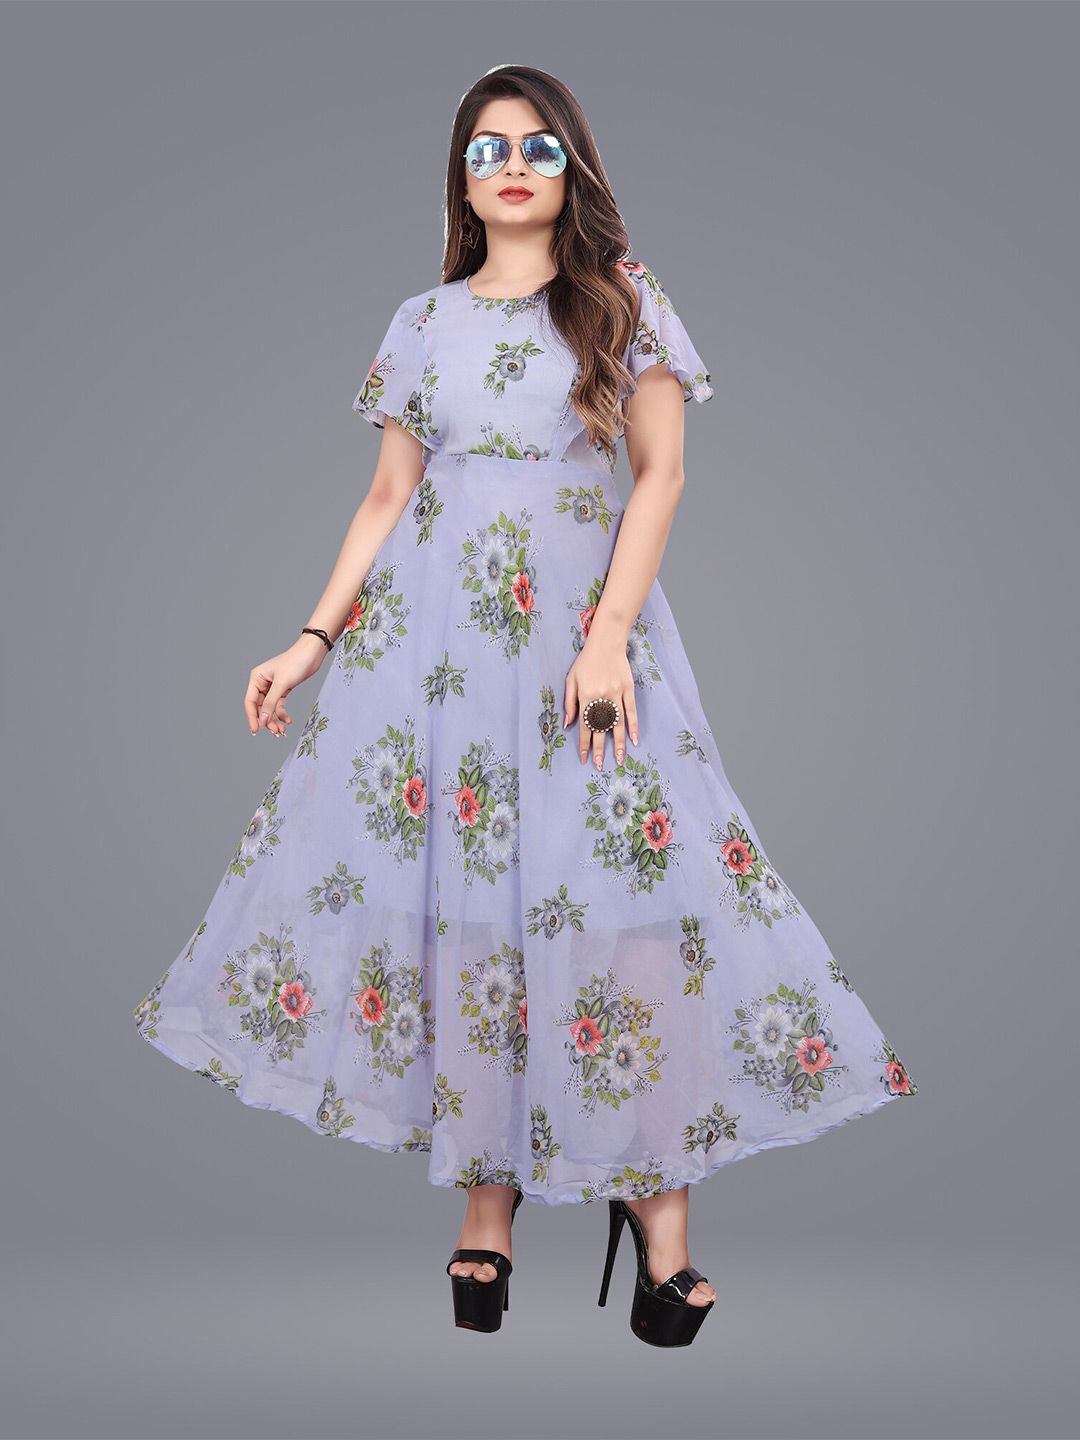 N N ENTERPRISE Floral Print Flared Sleeve Georgette Fit & Flare Maxi Dress Price in India